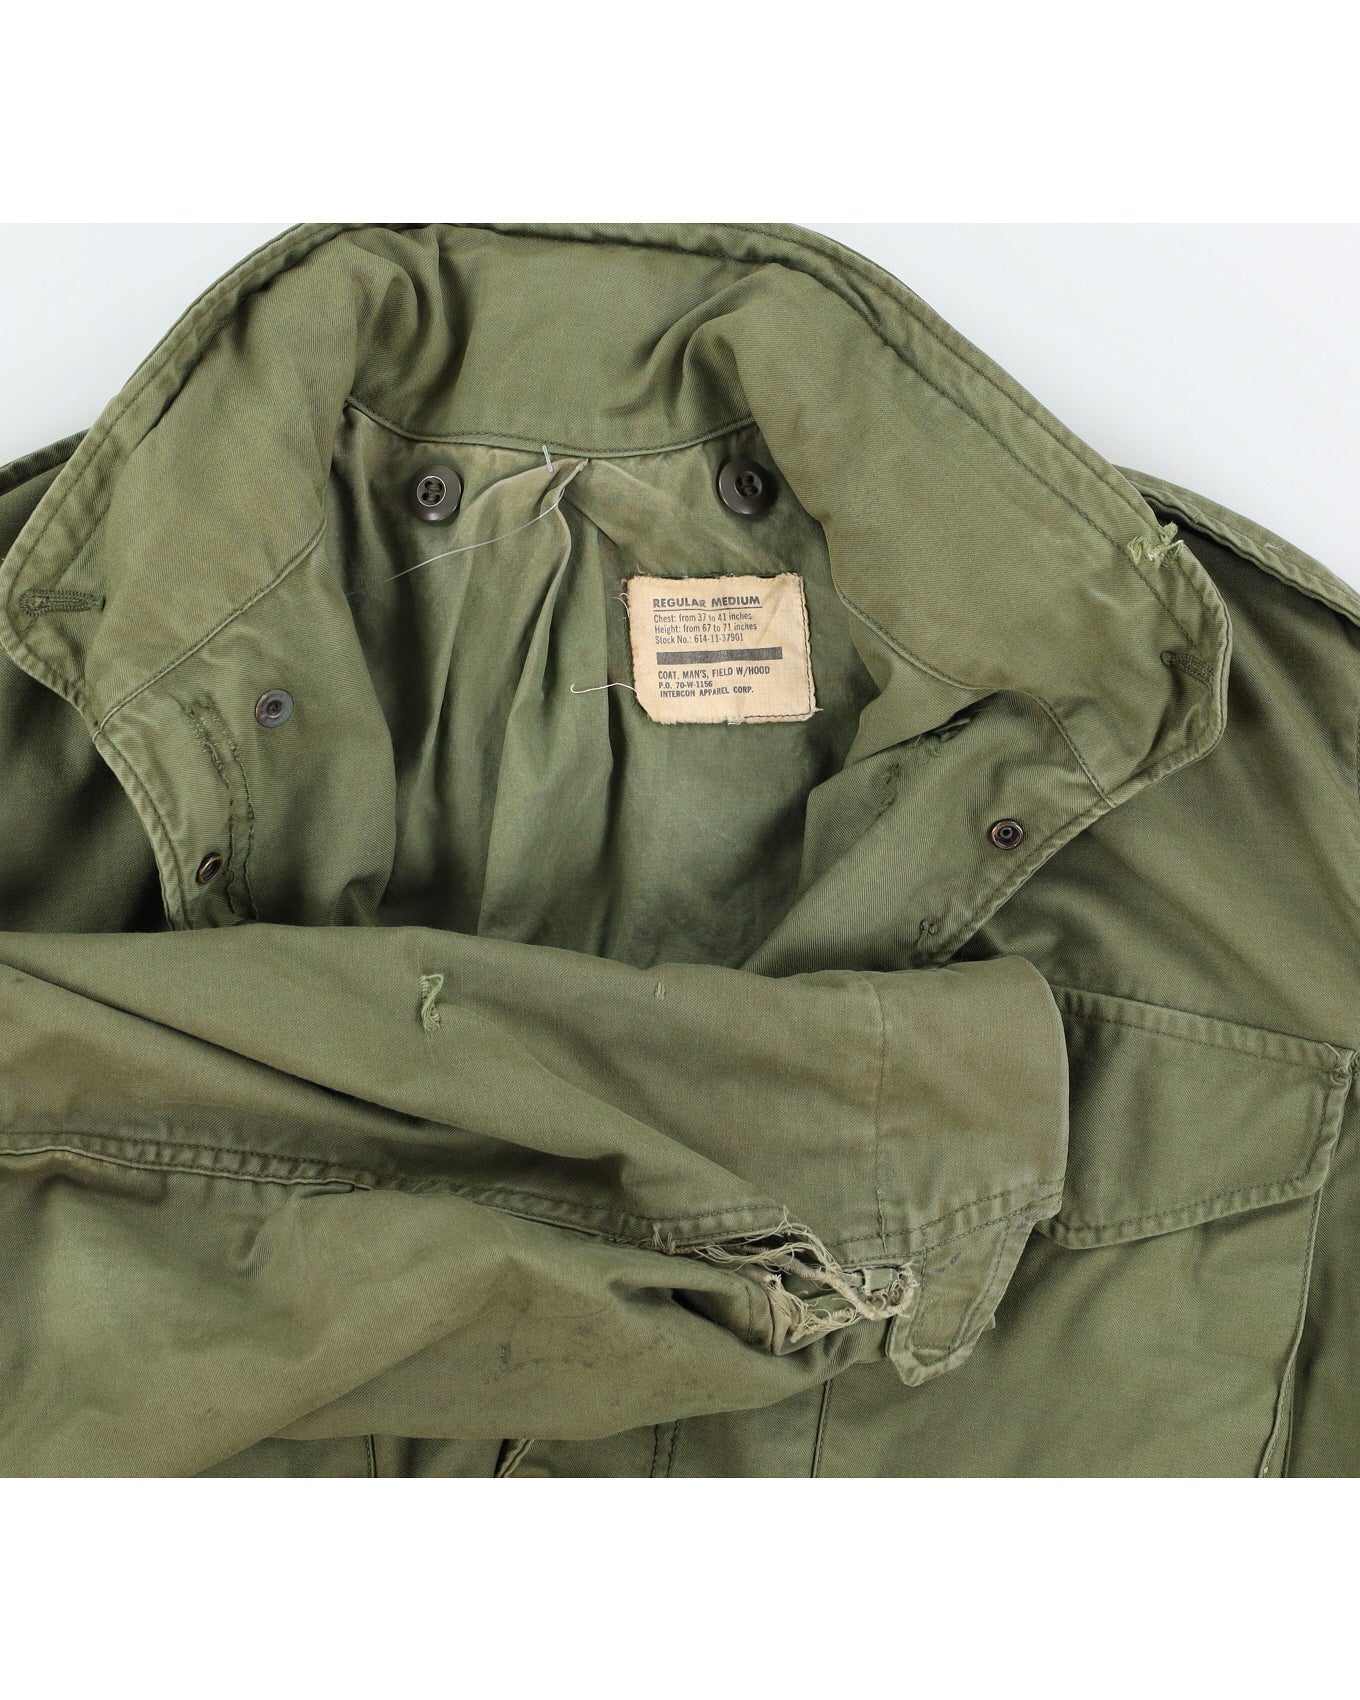 60s Vintage US Army M65 Field Jacket - M